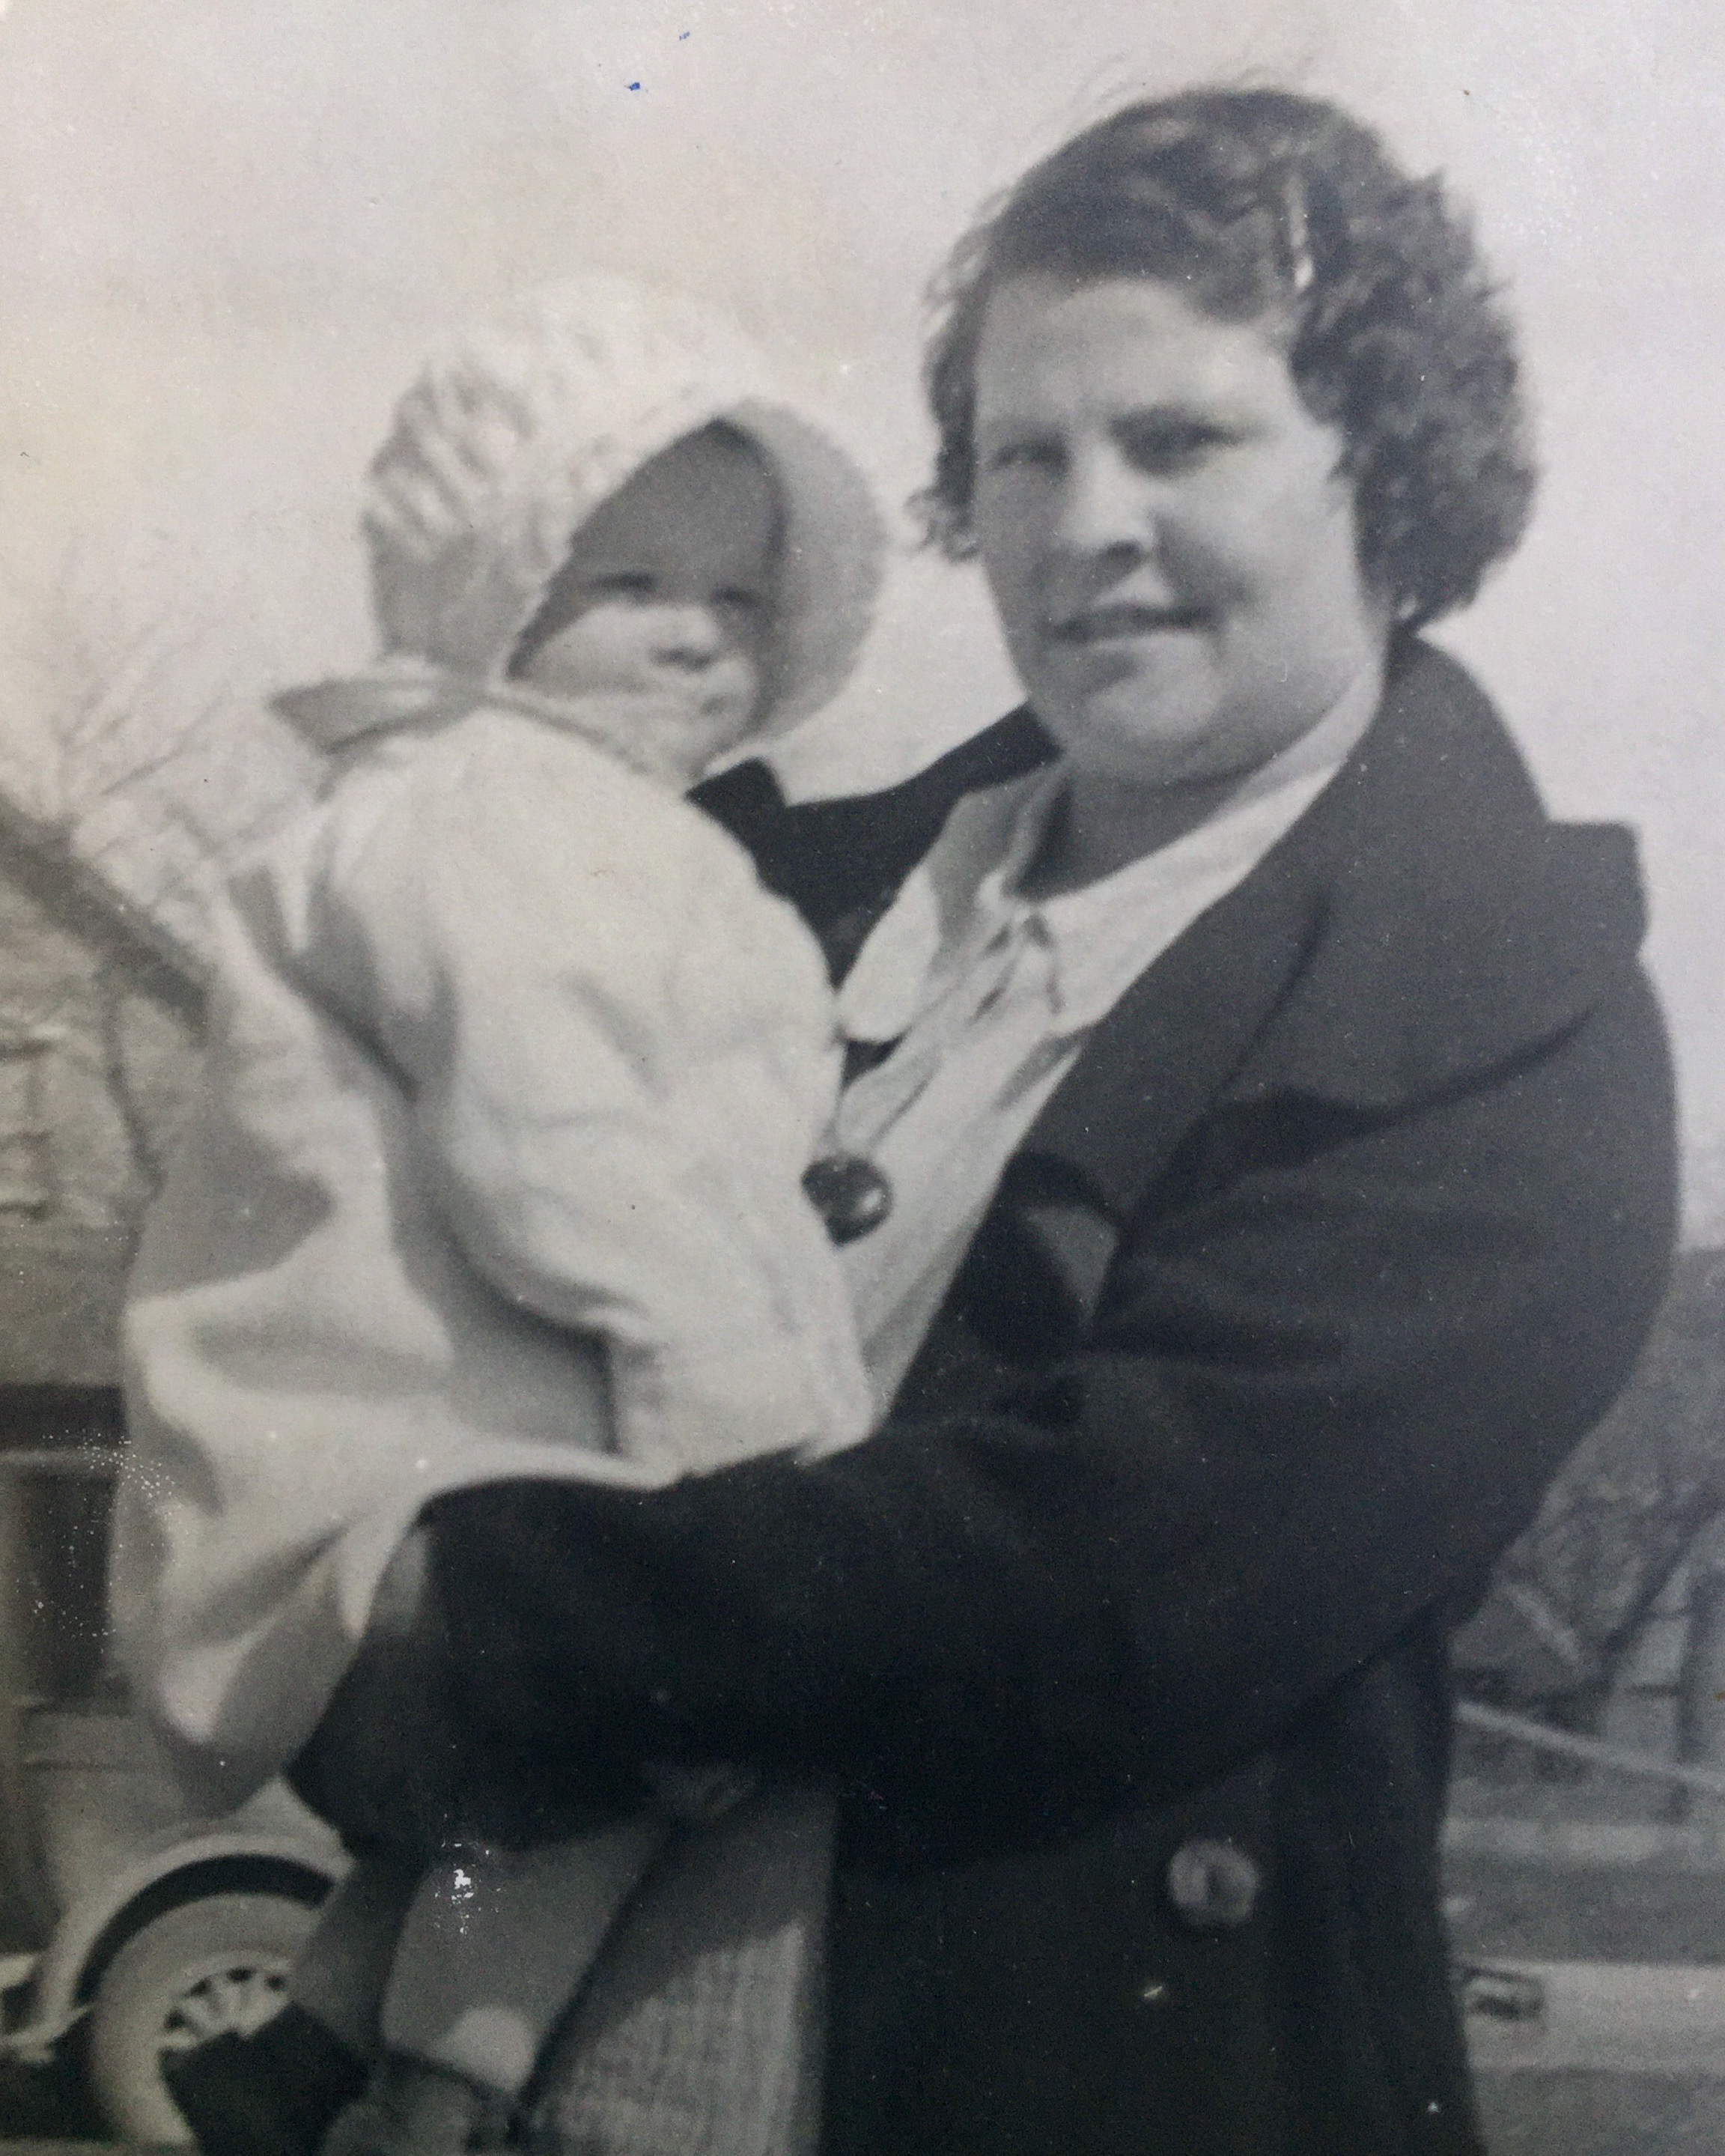 My Mom and Grandma (around late 1930s) on their upper Michigan farm.